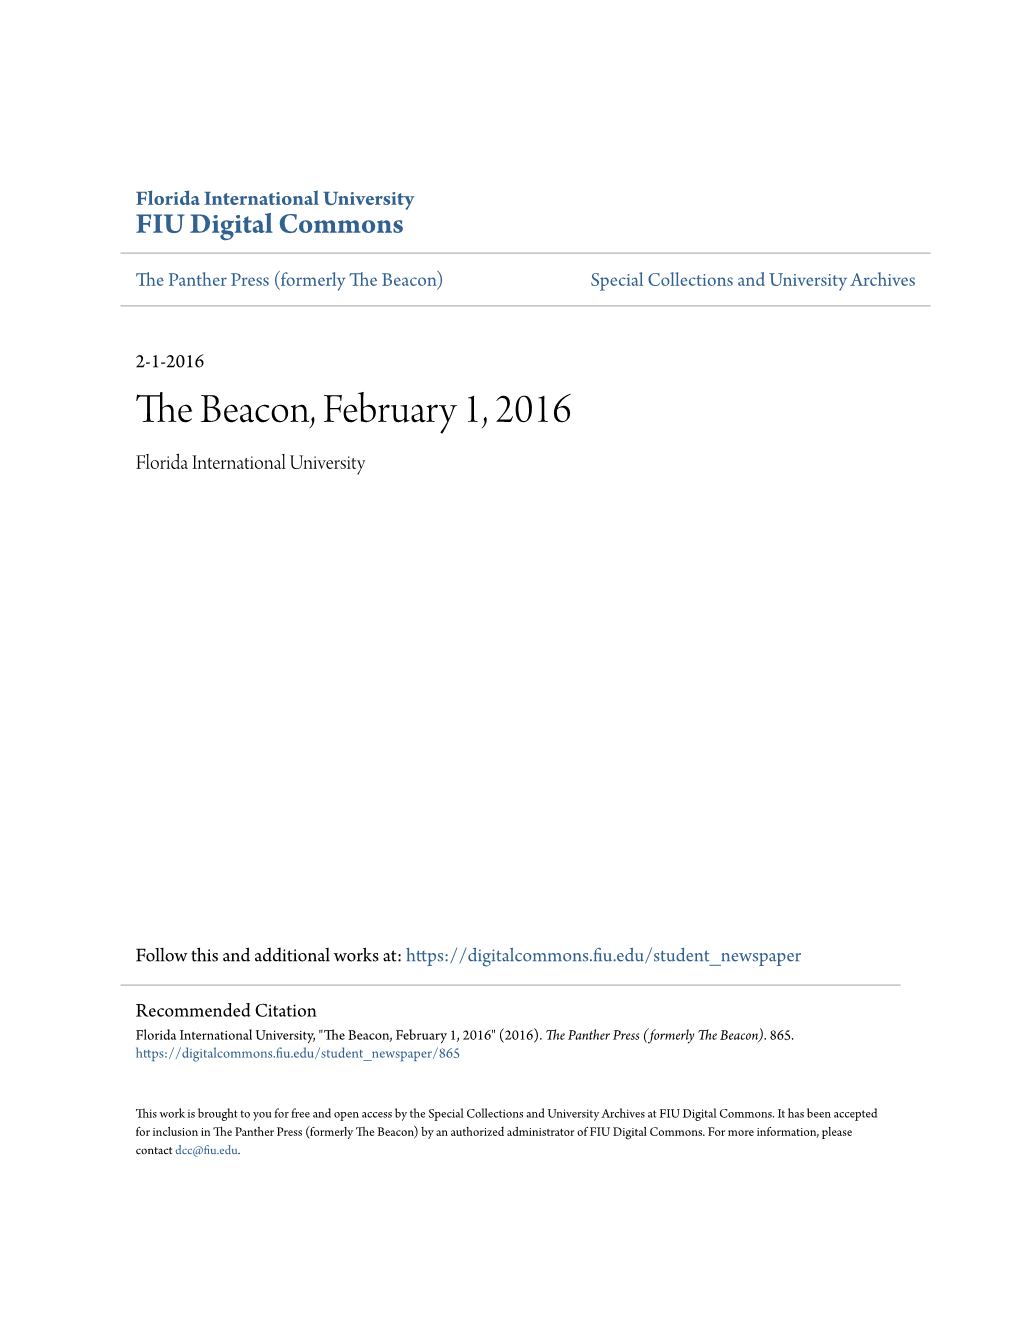 The Beacon, February 1, 2016 Florida International University